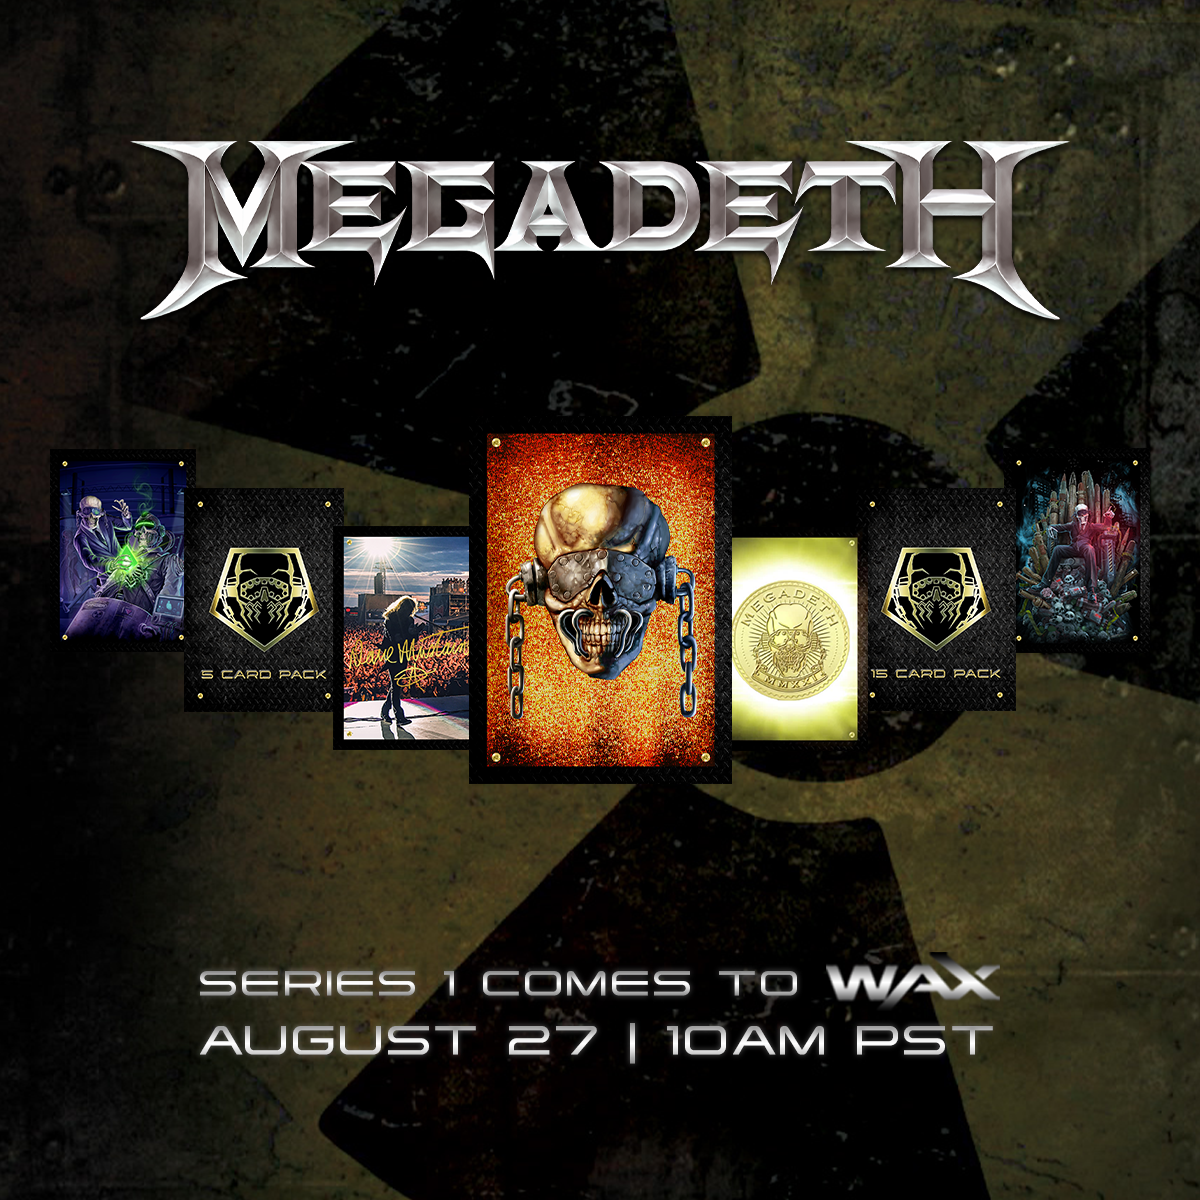 Megadeth x Wax Series 1 Digital Collectibles – Megadeth Cyber Army